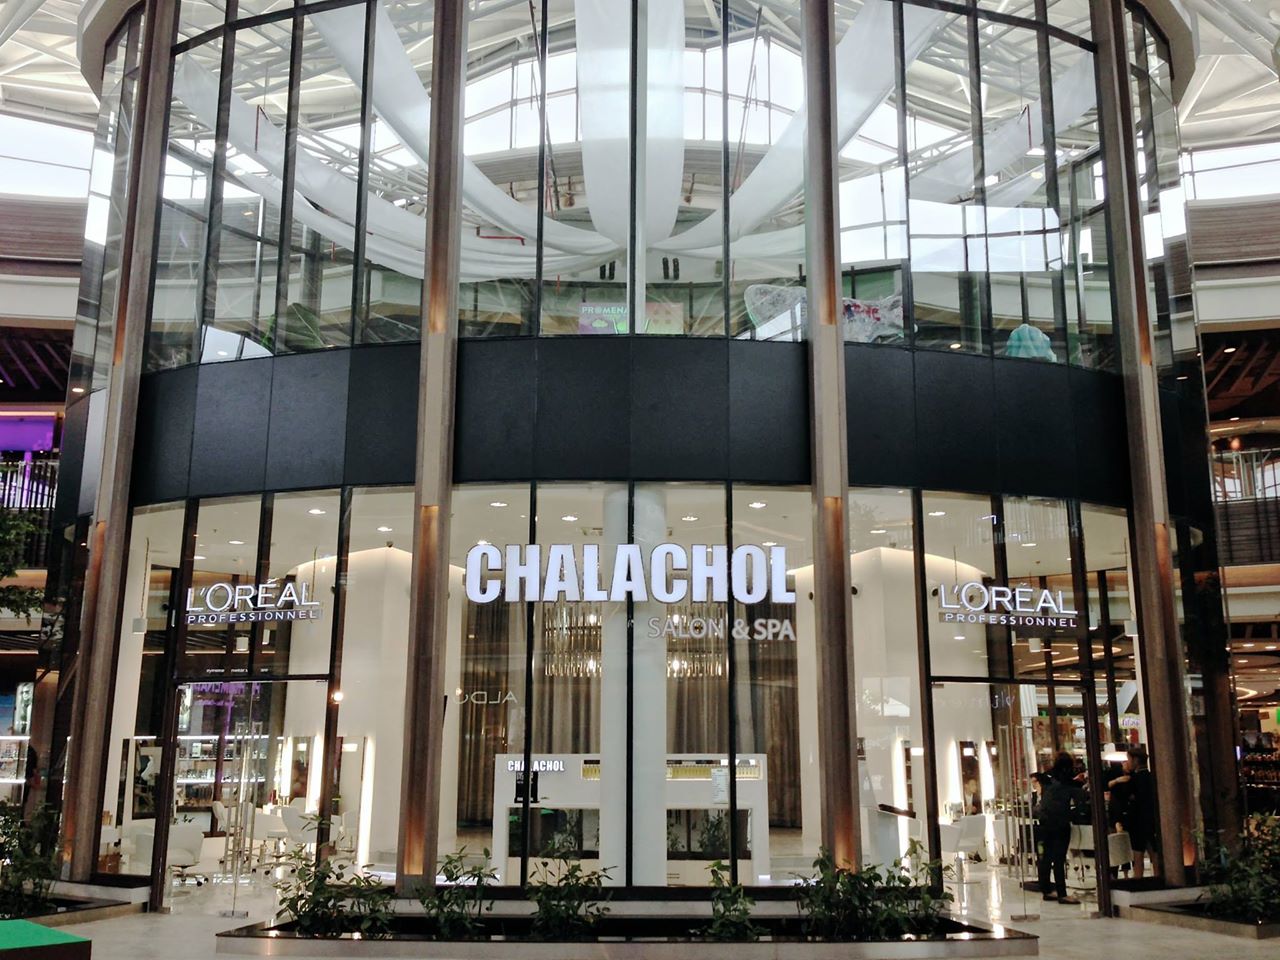 Chalachol Salon & Spa